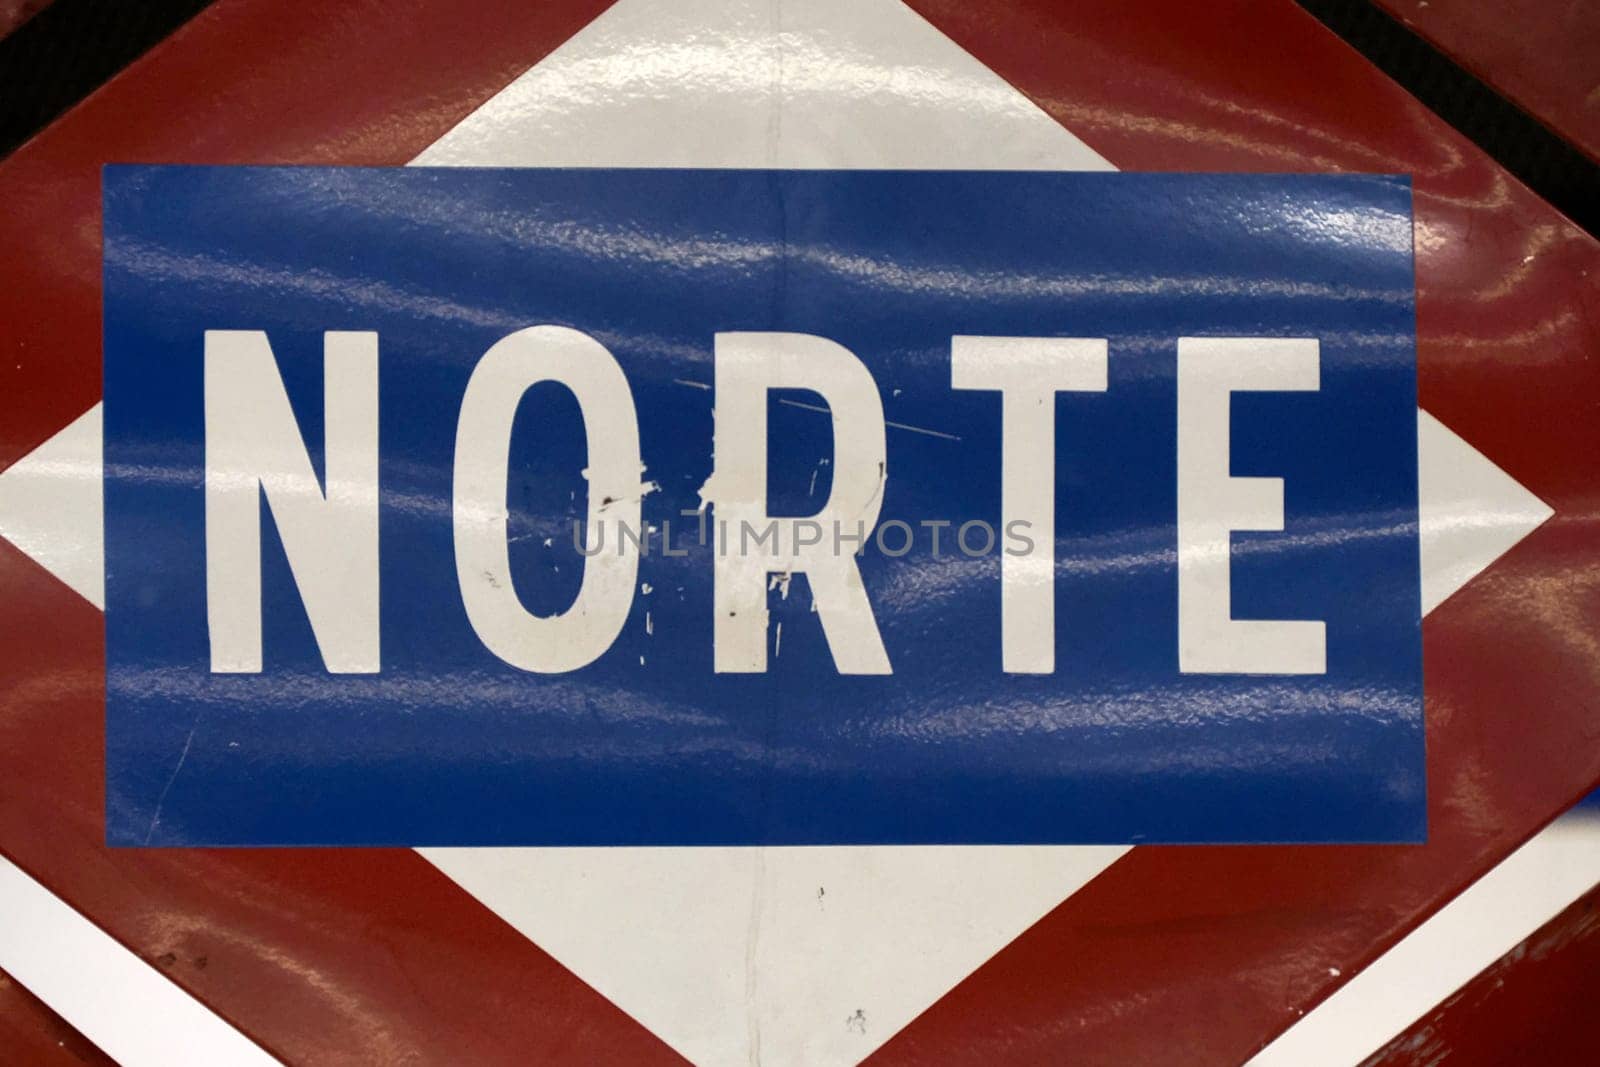 norte Metro Station Sign in Madrid Spain detail